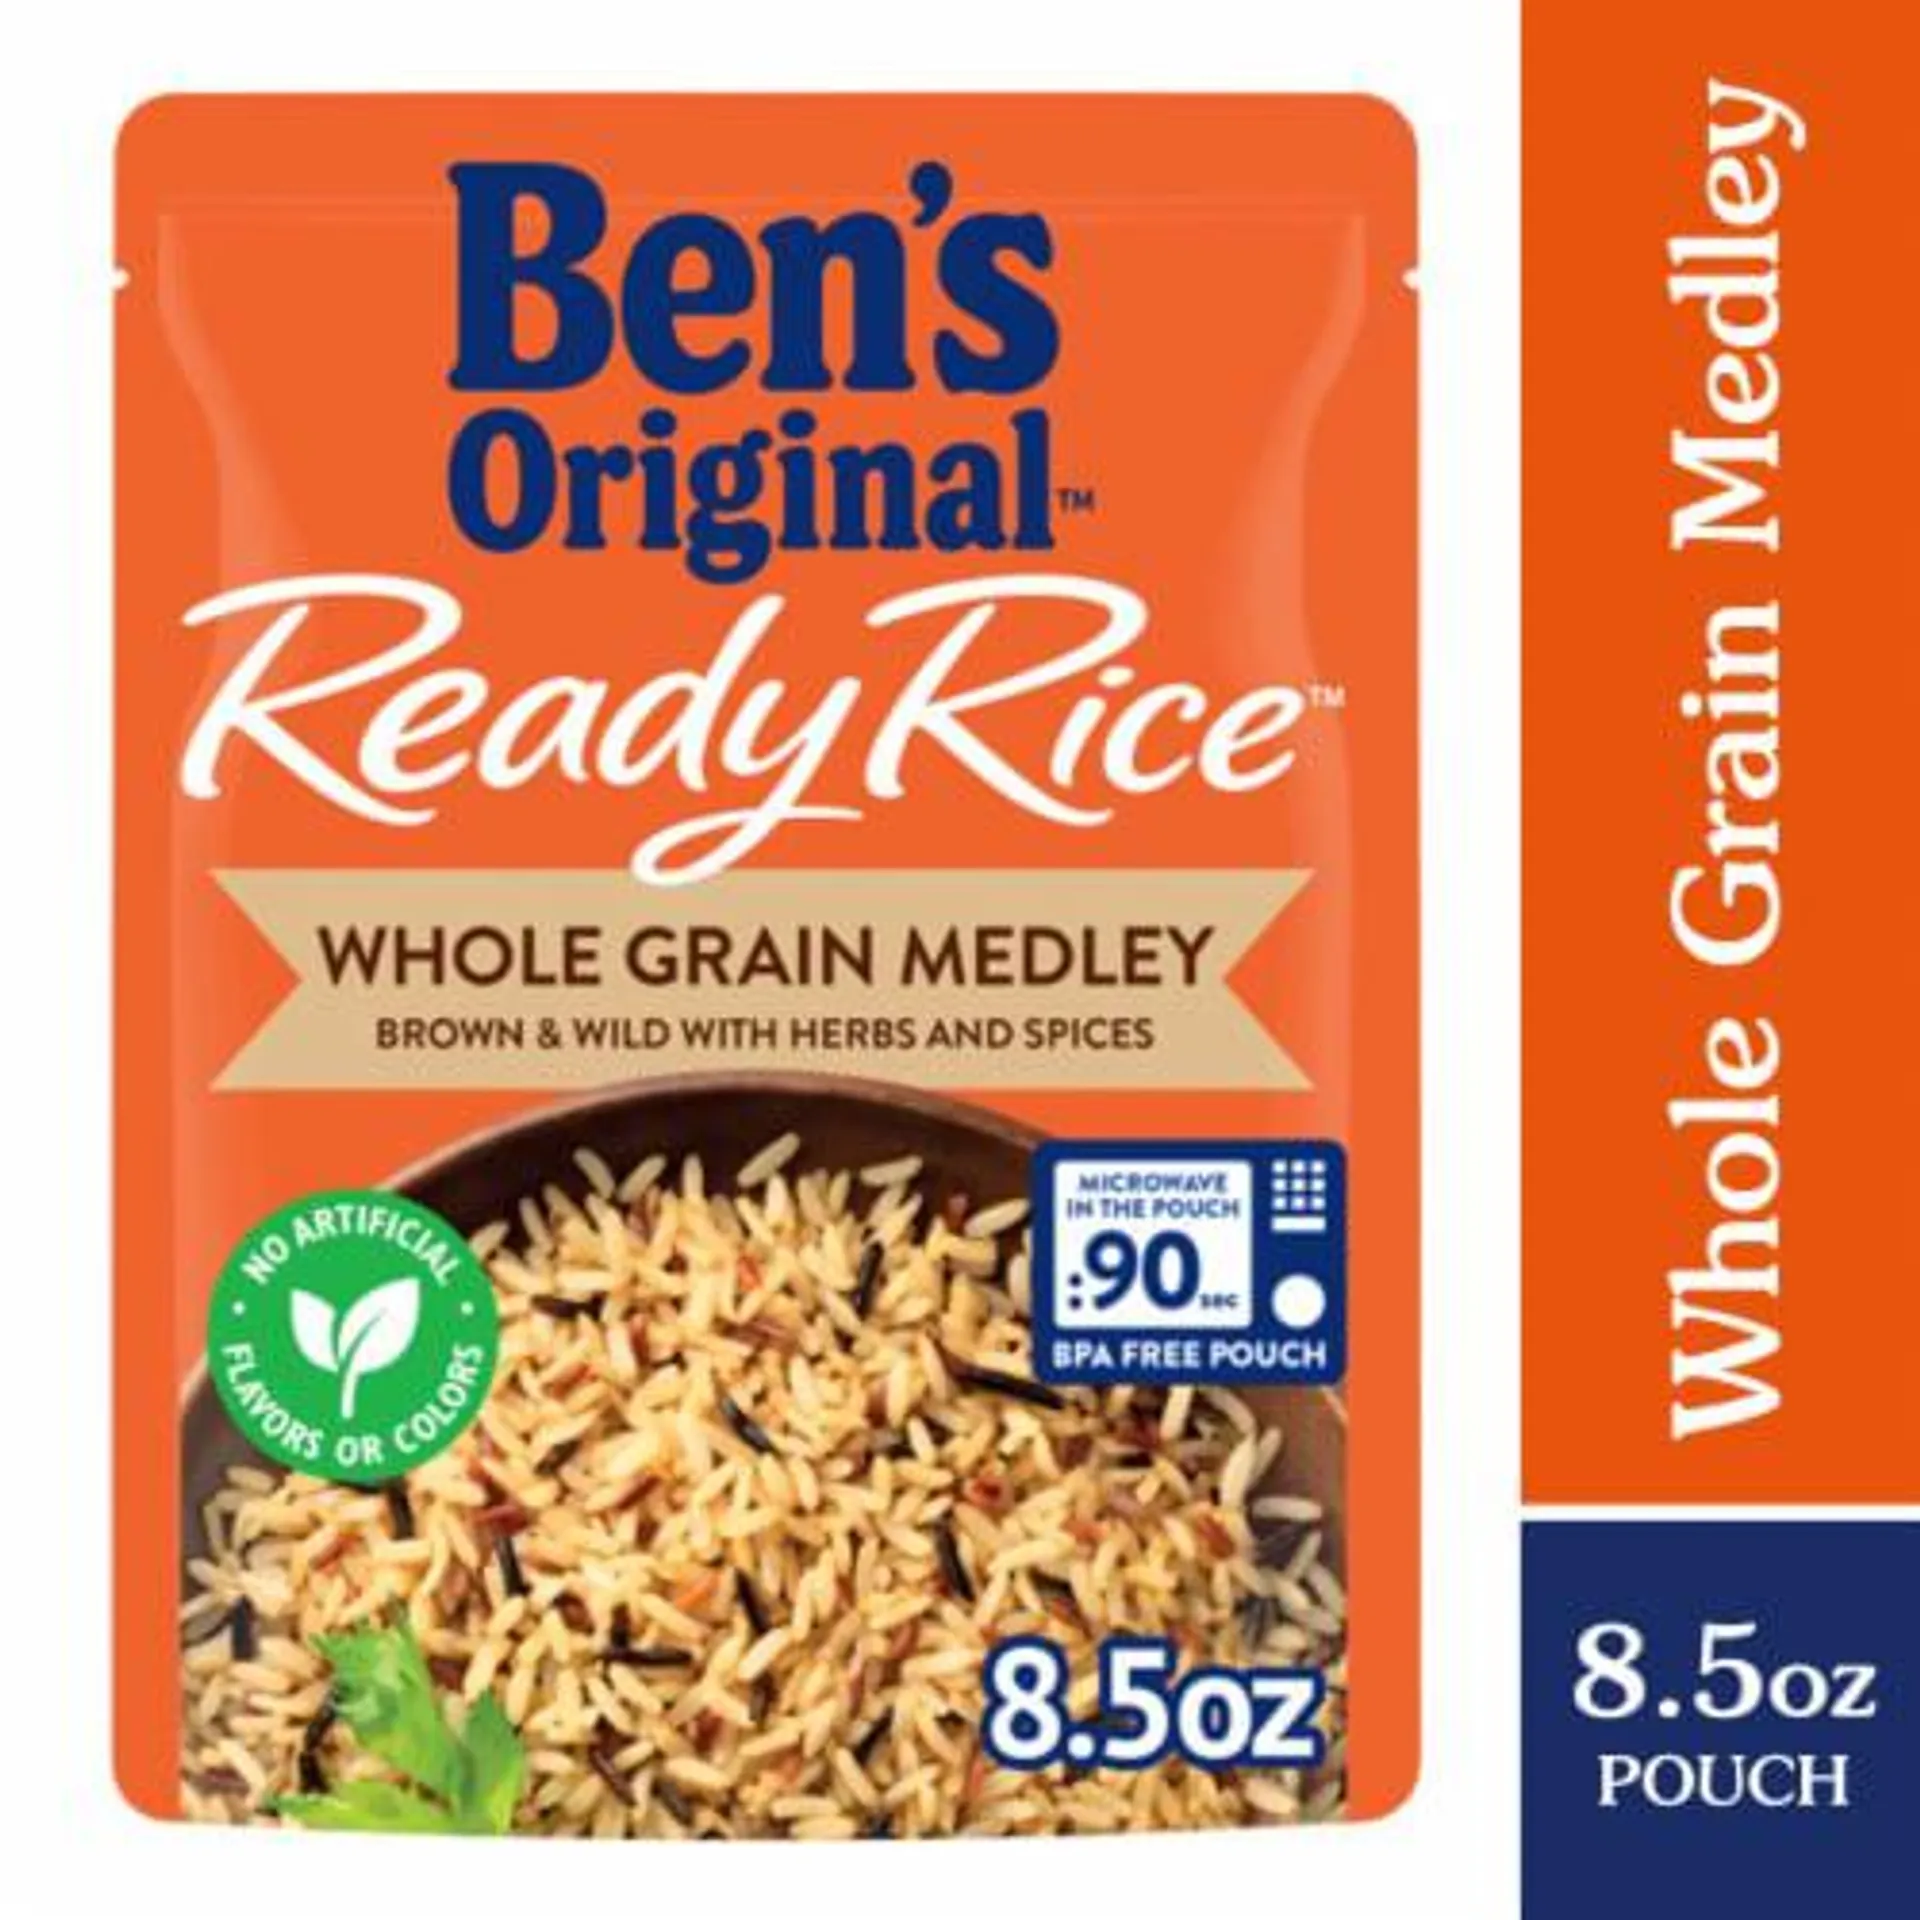 Ben's Original™ Ready Rice Whole Grain Medley Flavored Rice